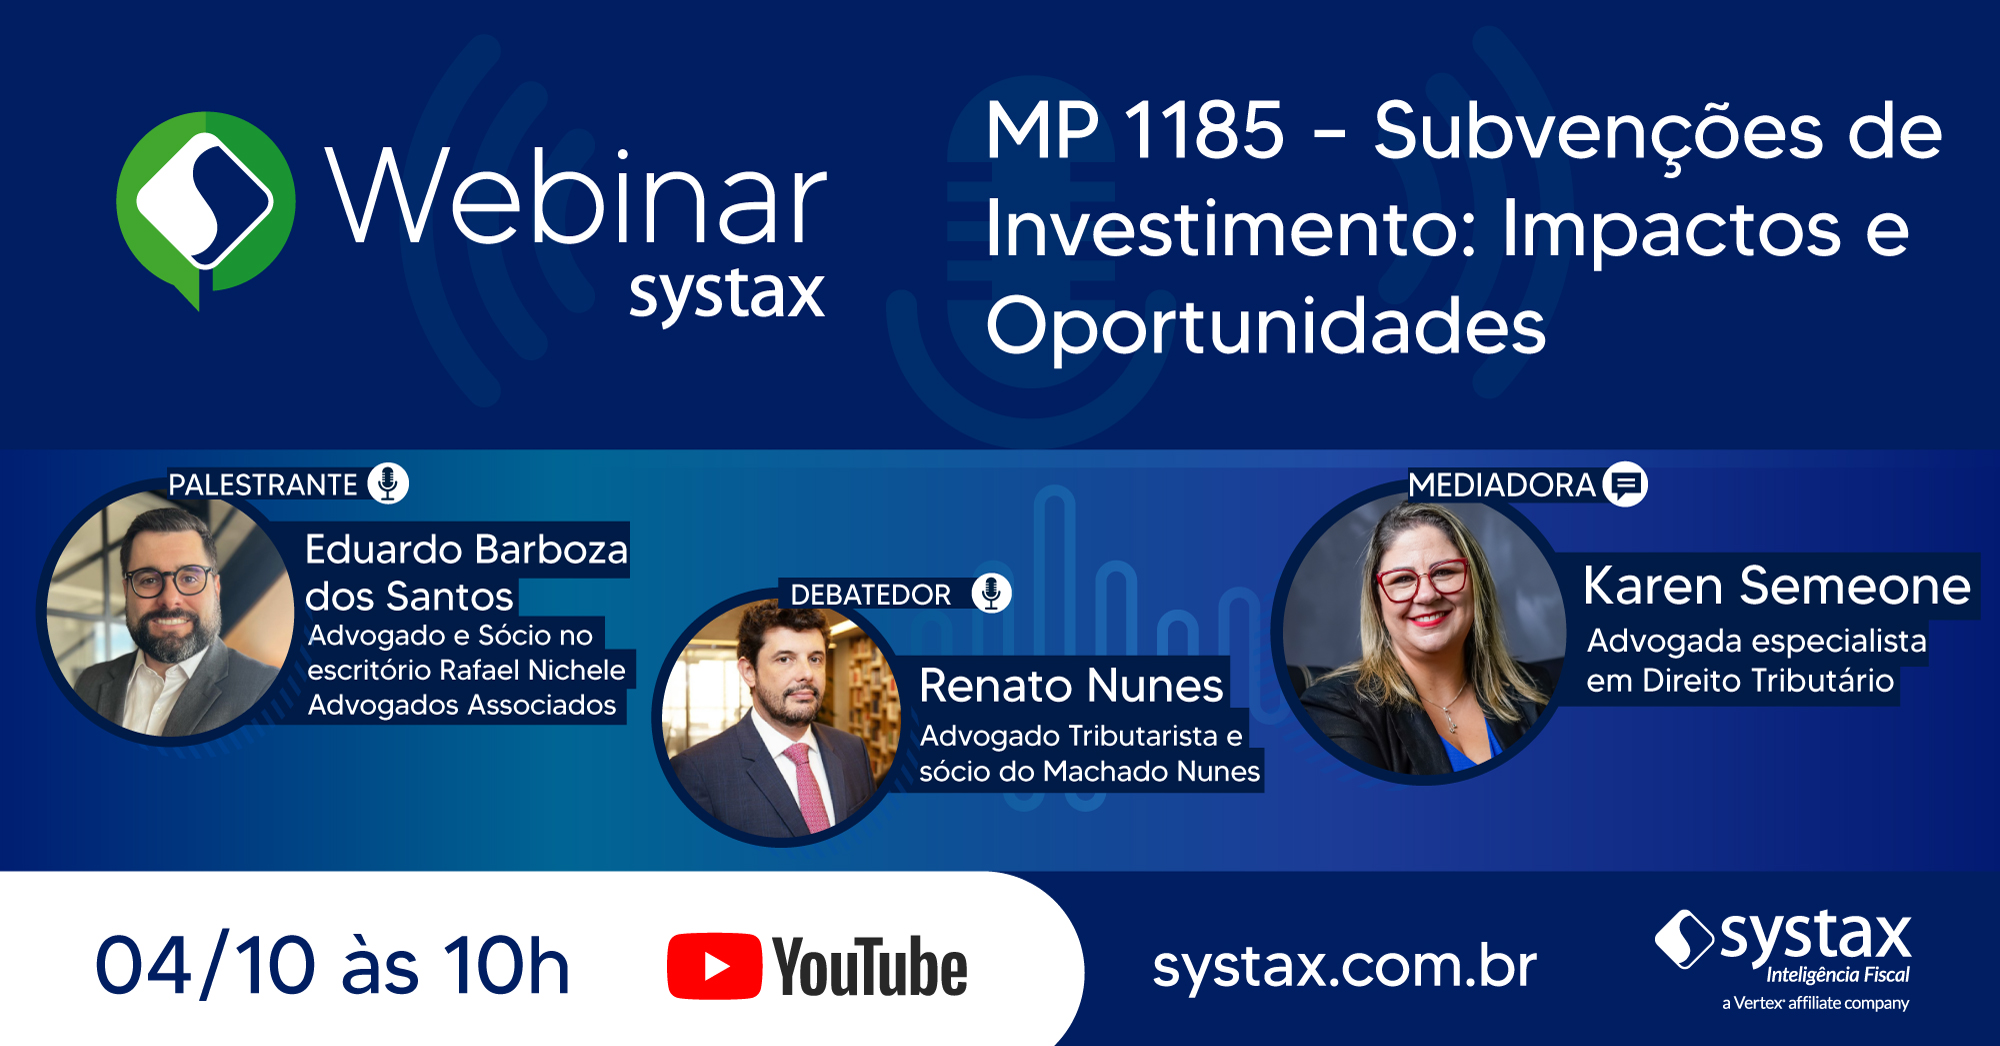 Webinar - MP 1185 – Subvenções de Investimento: Impactos e Oportunidades -  Systax